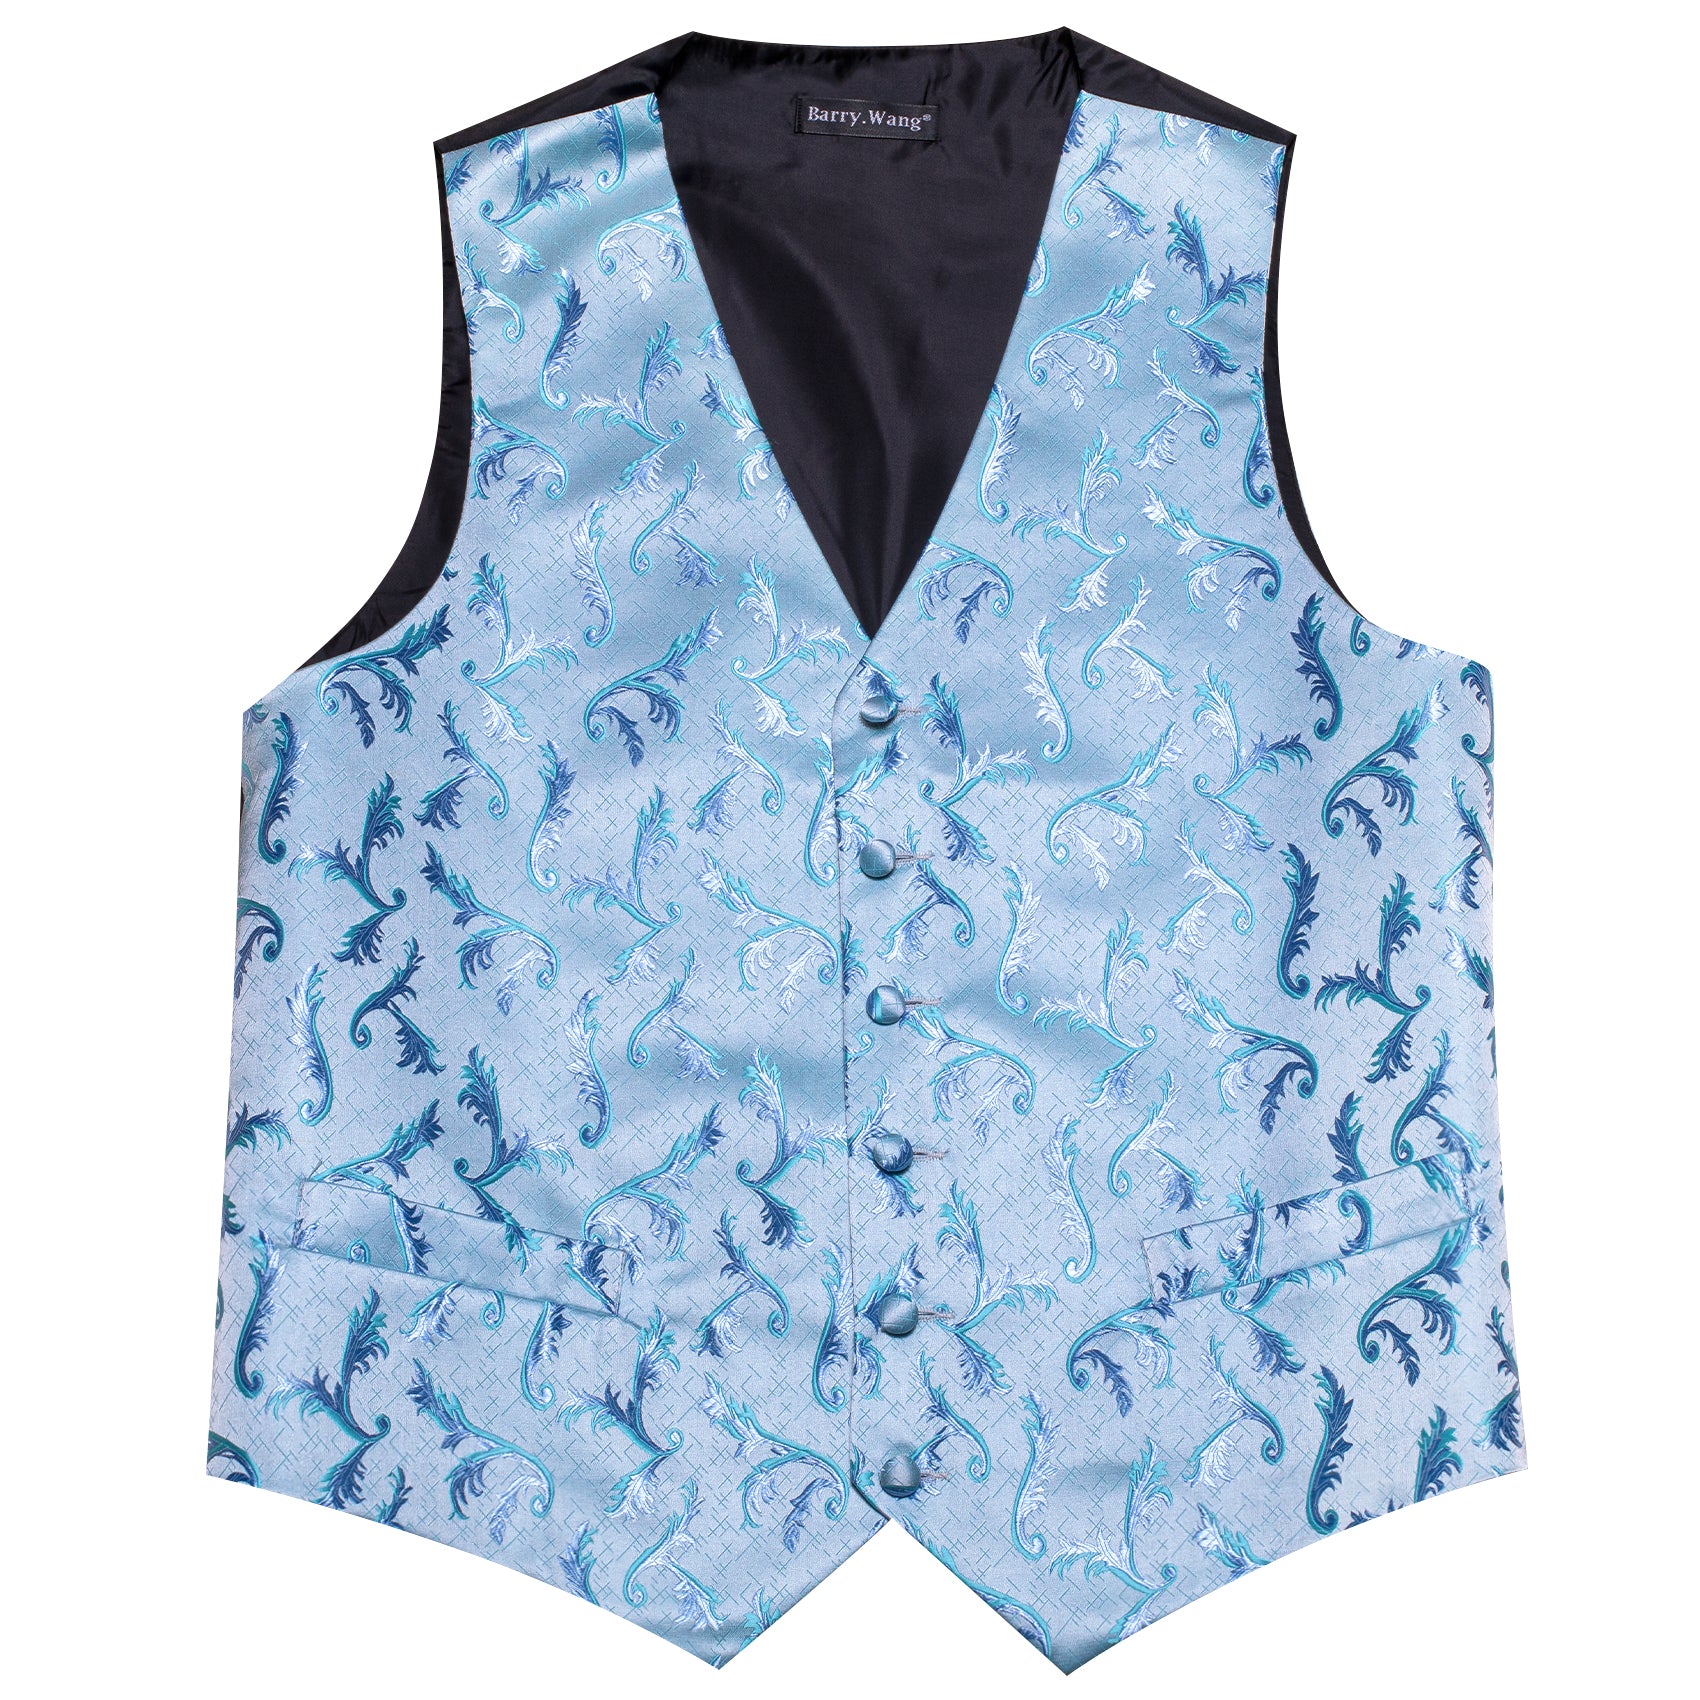 Beautiful Blue Floral Silk Vest Tie Pocket square Cufflinks Set